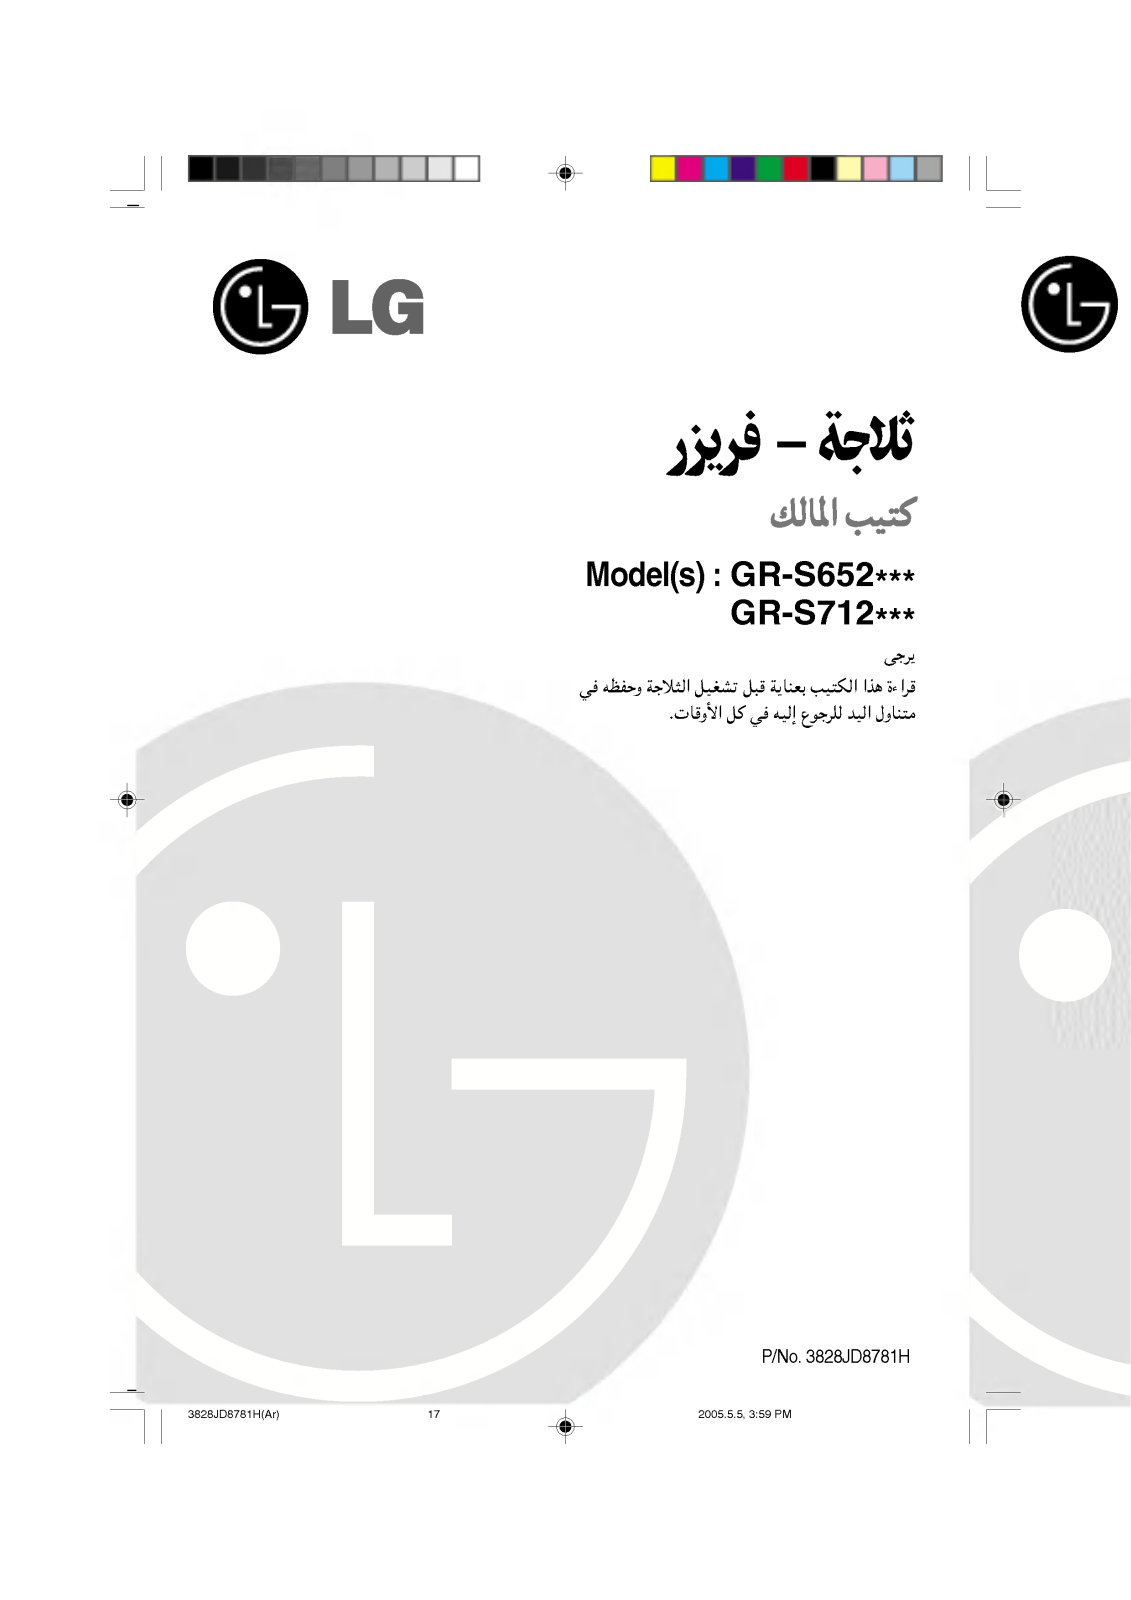 LG GR-S712ABQ Owner’s Manual